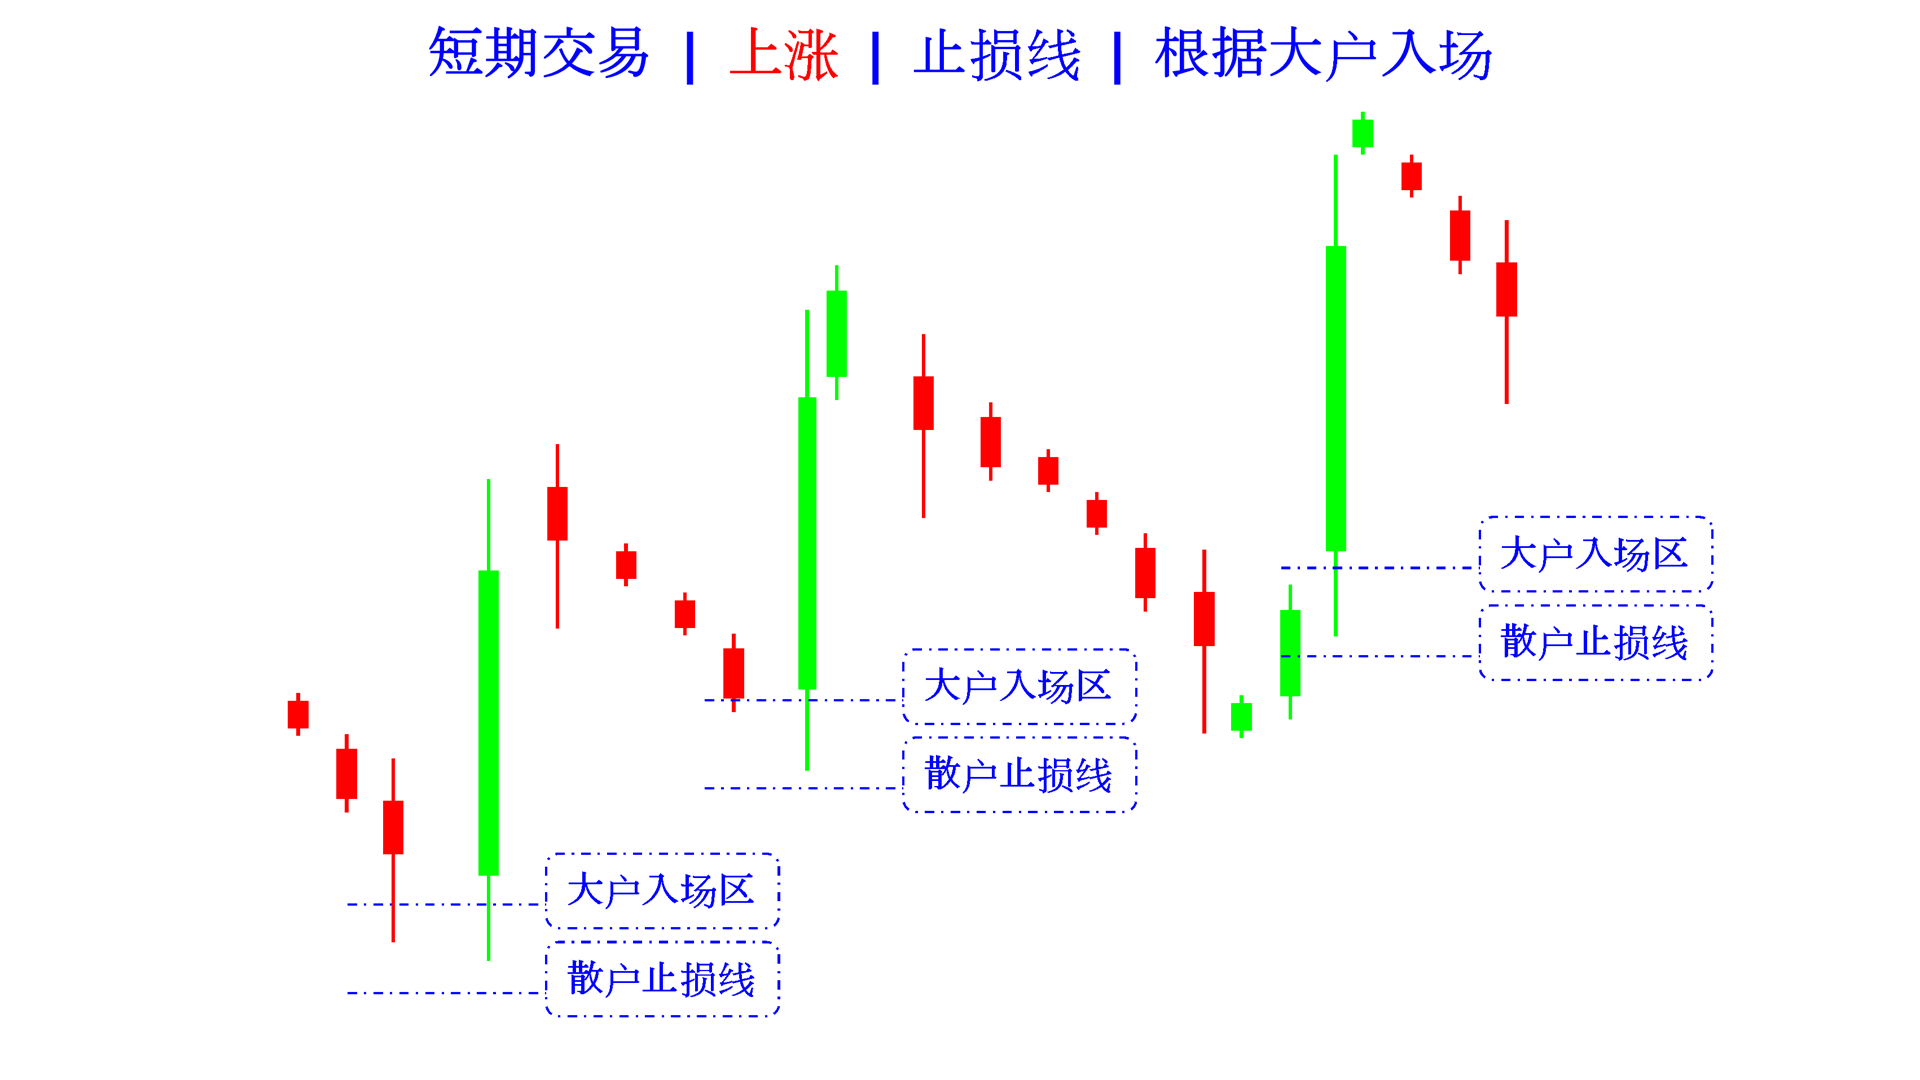 stop loss line lower major in rising cn